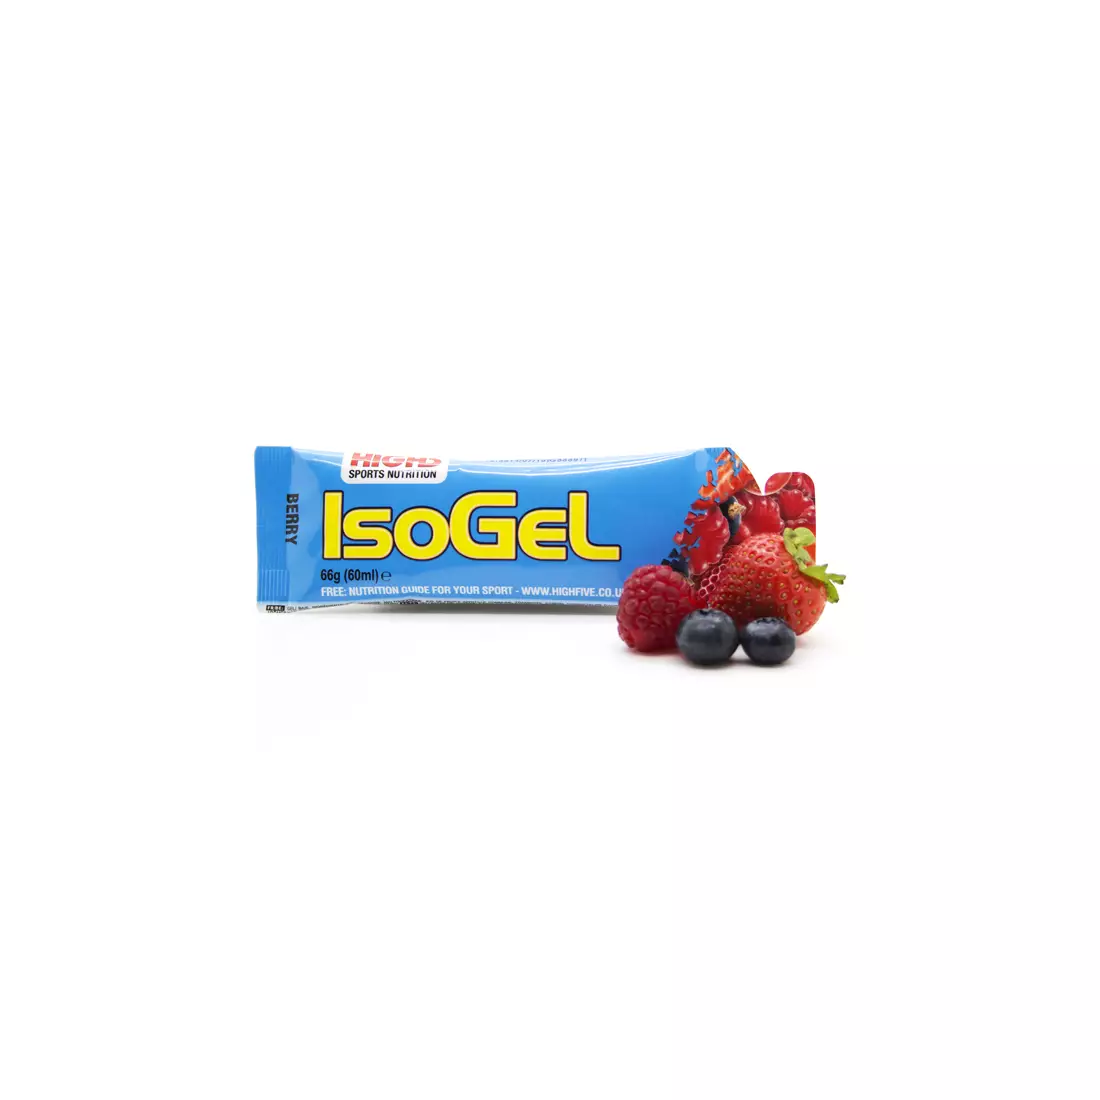 HIGH5 IsoGel energy gel flavor: Blueberry capacity. 60ml